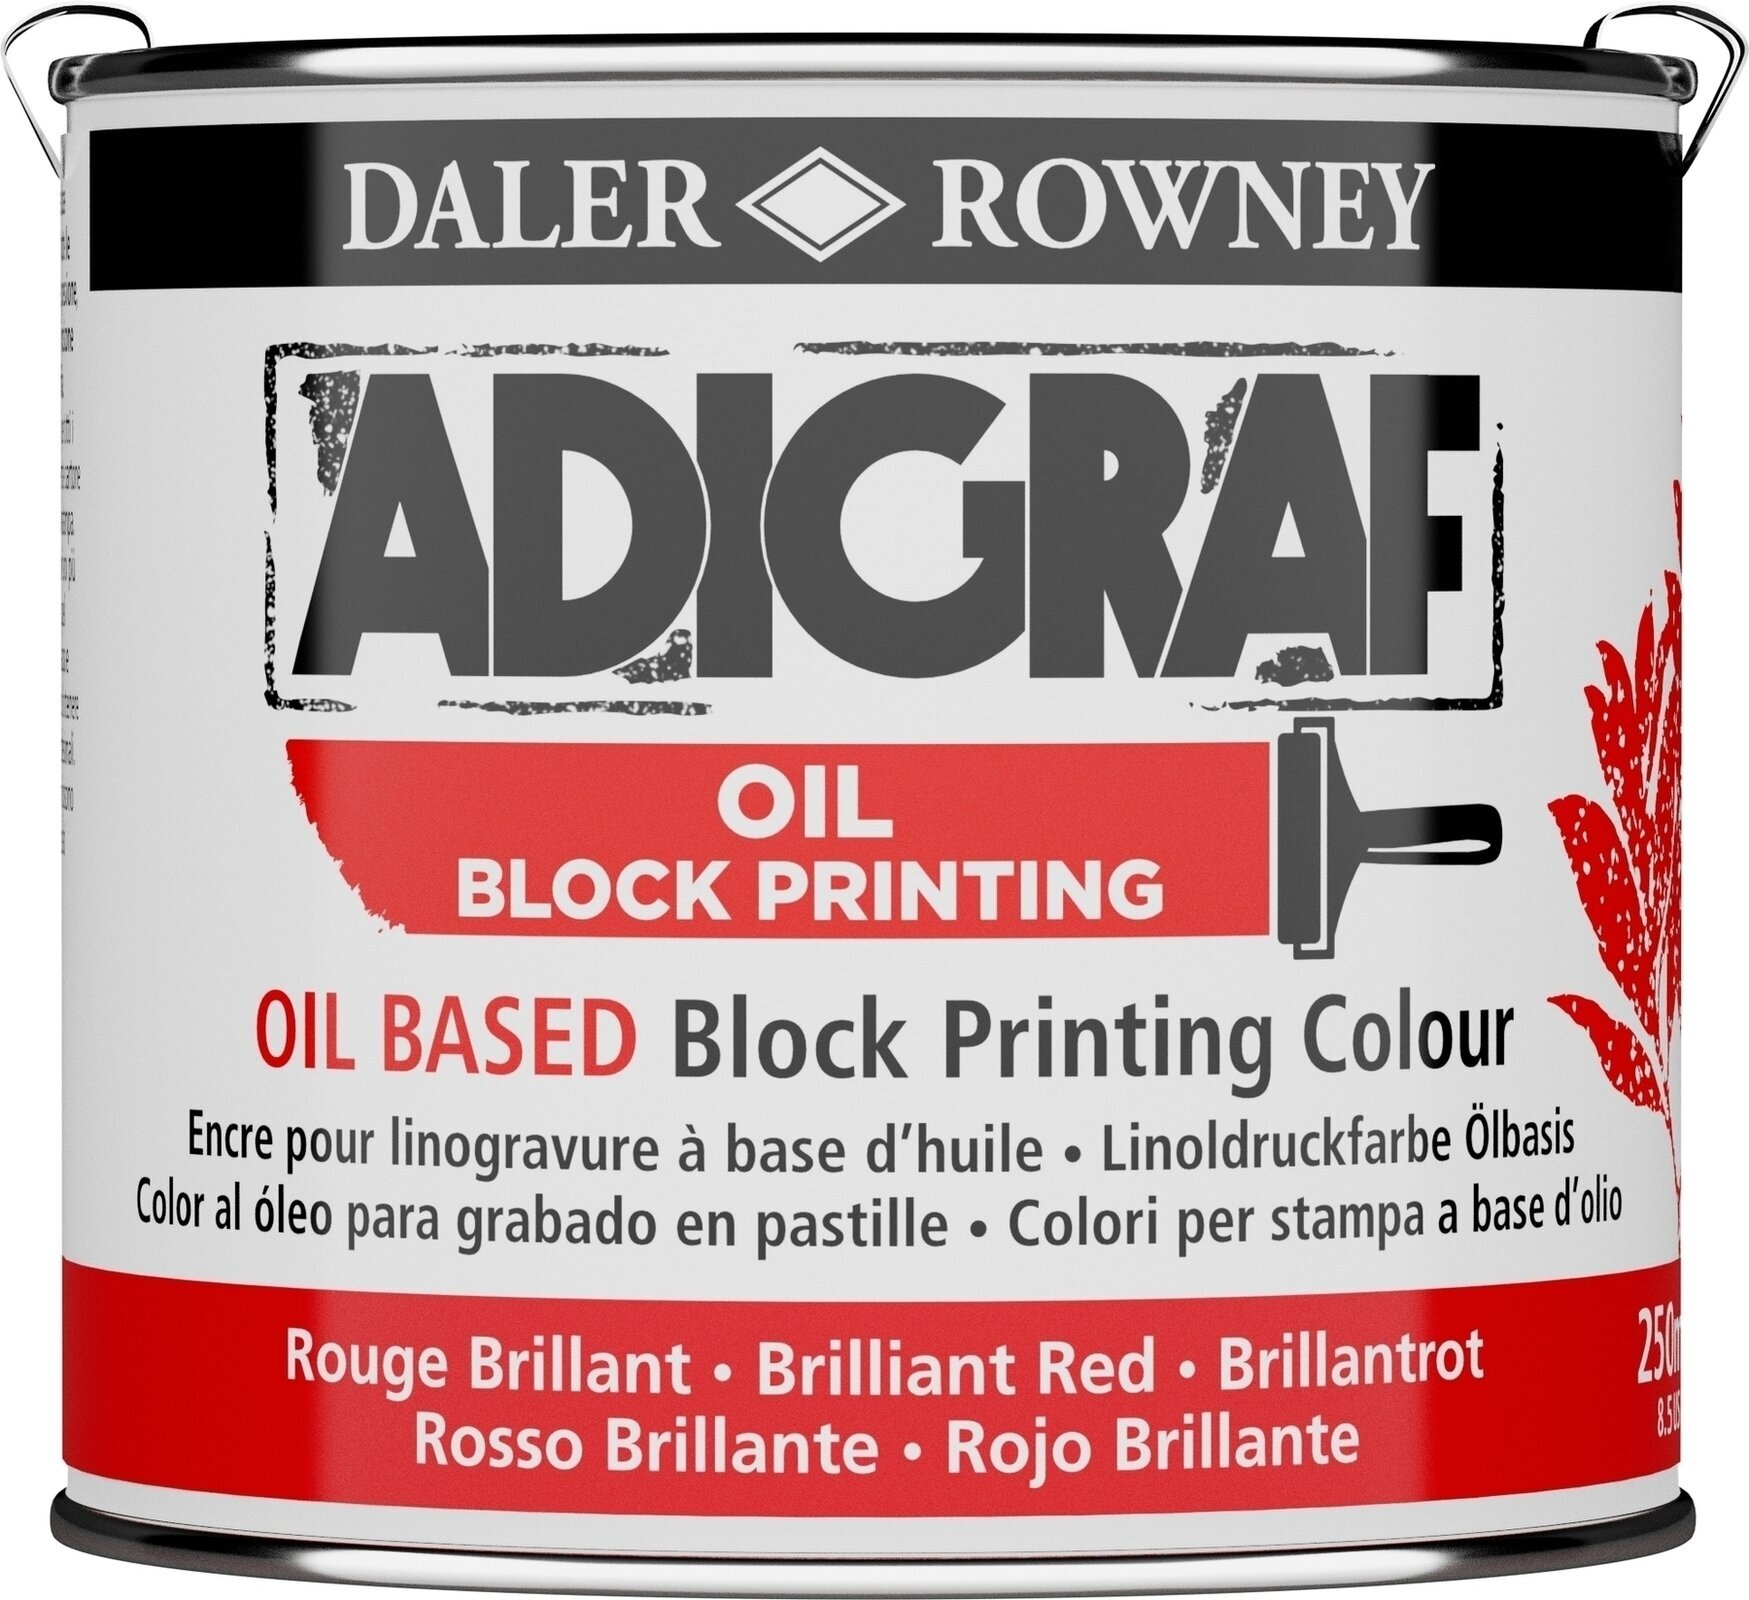 Festék linómetszethez Daler Rowney Adigraf Block Printing Oil Festék linómetszethez Brilliant Red 250 ml